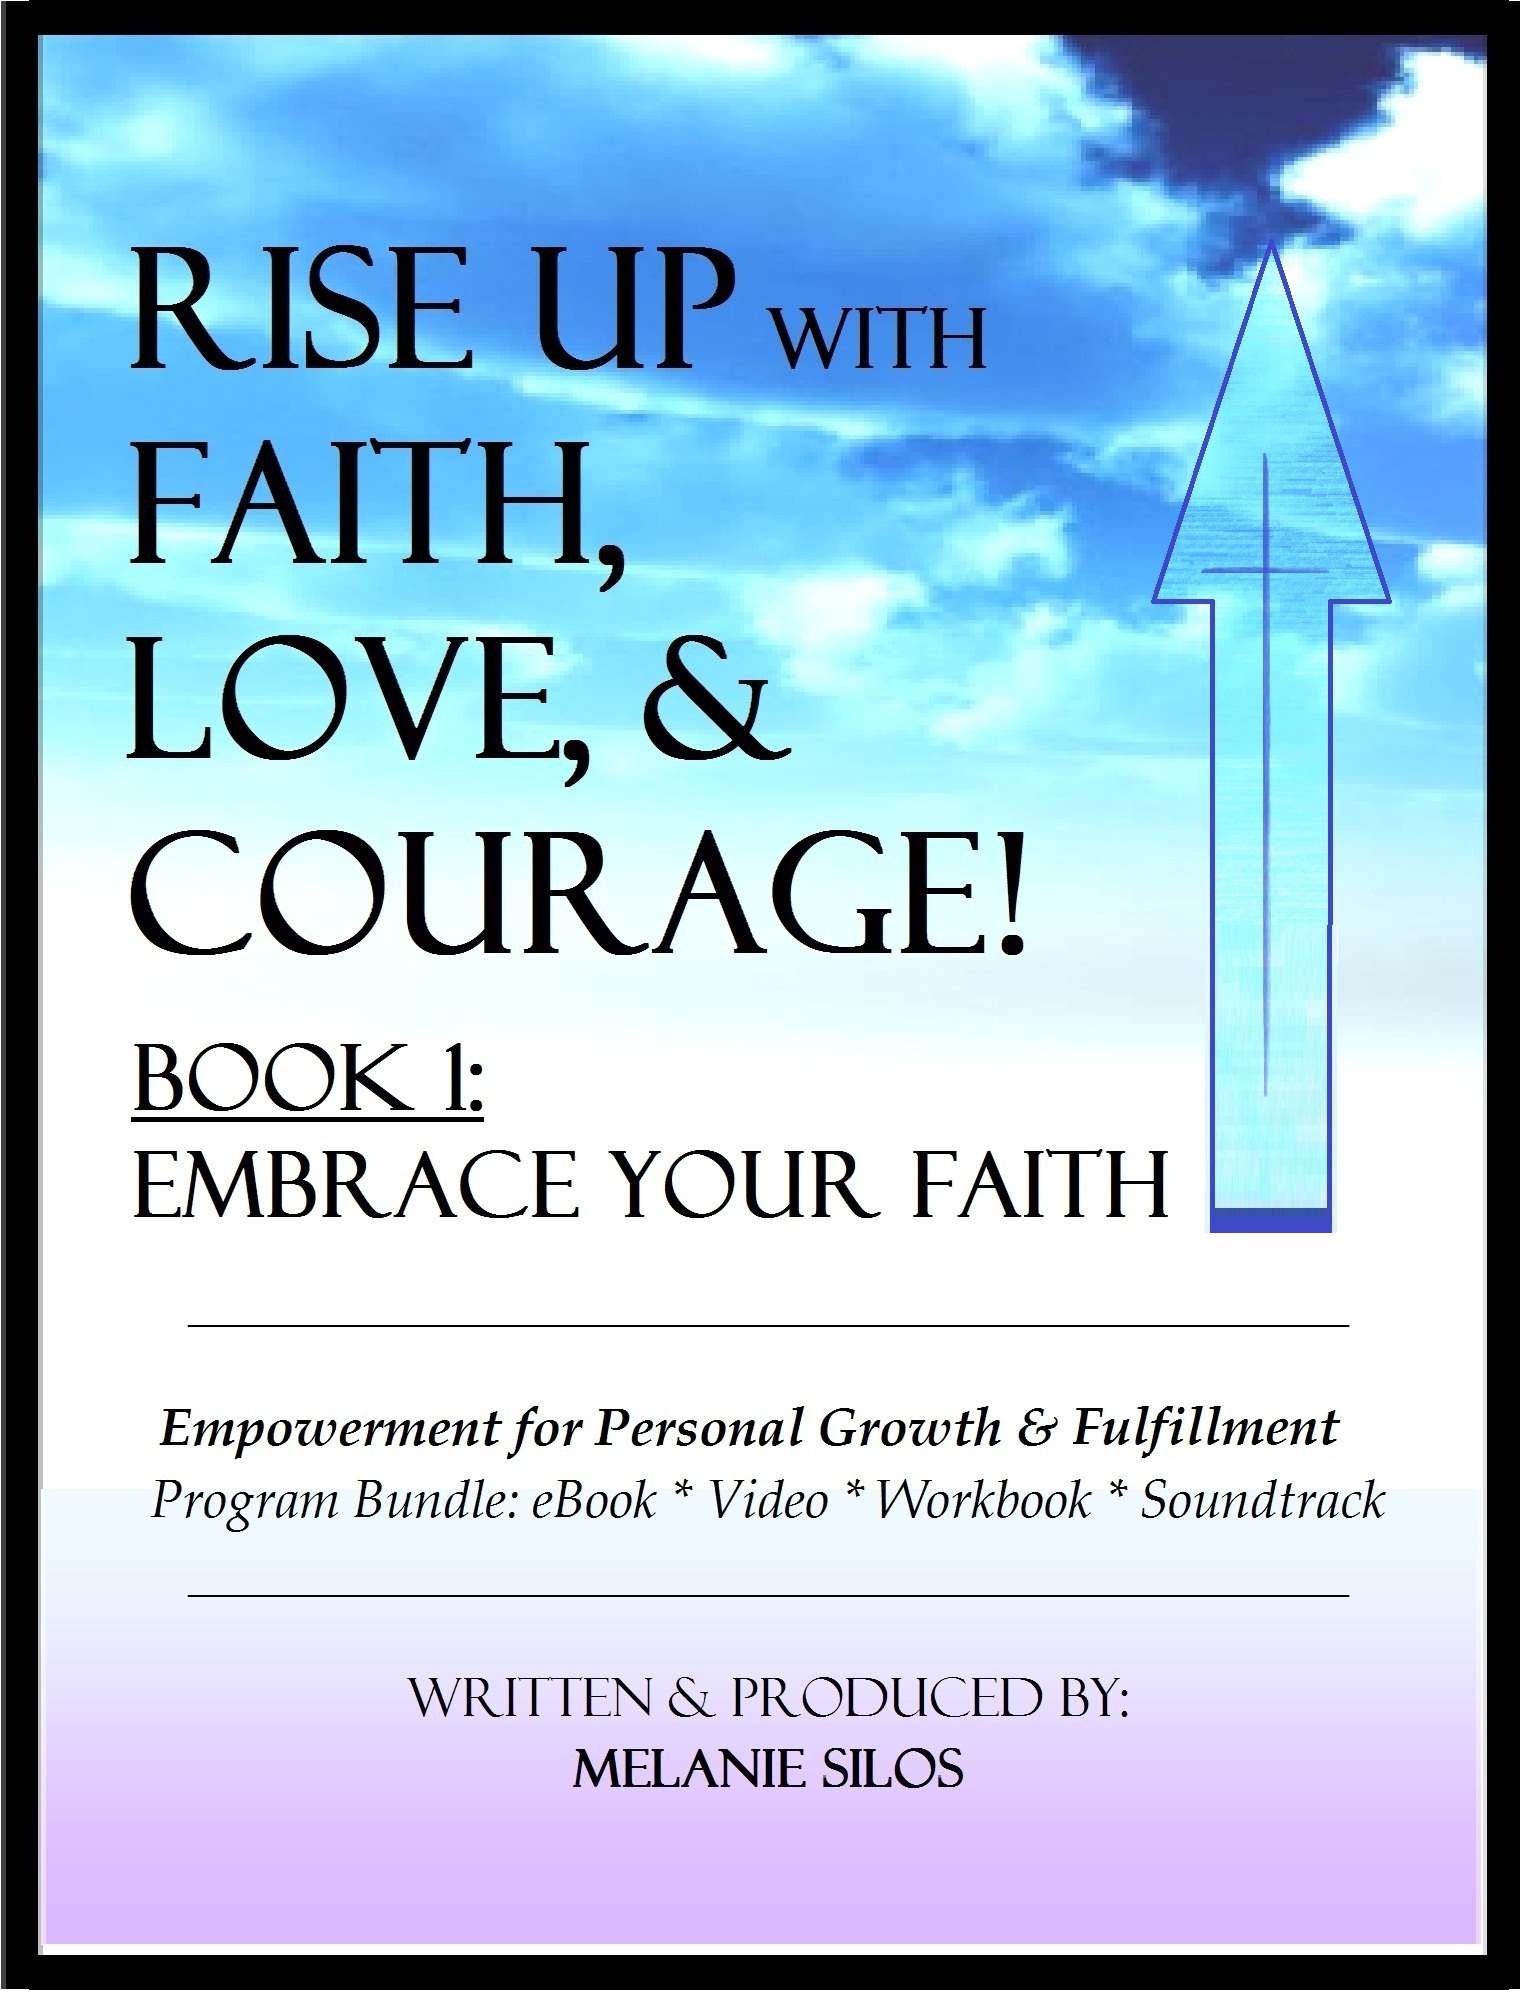 Rise Up with Faith Love & Courage - faith-based empowerment training webinar series